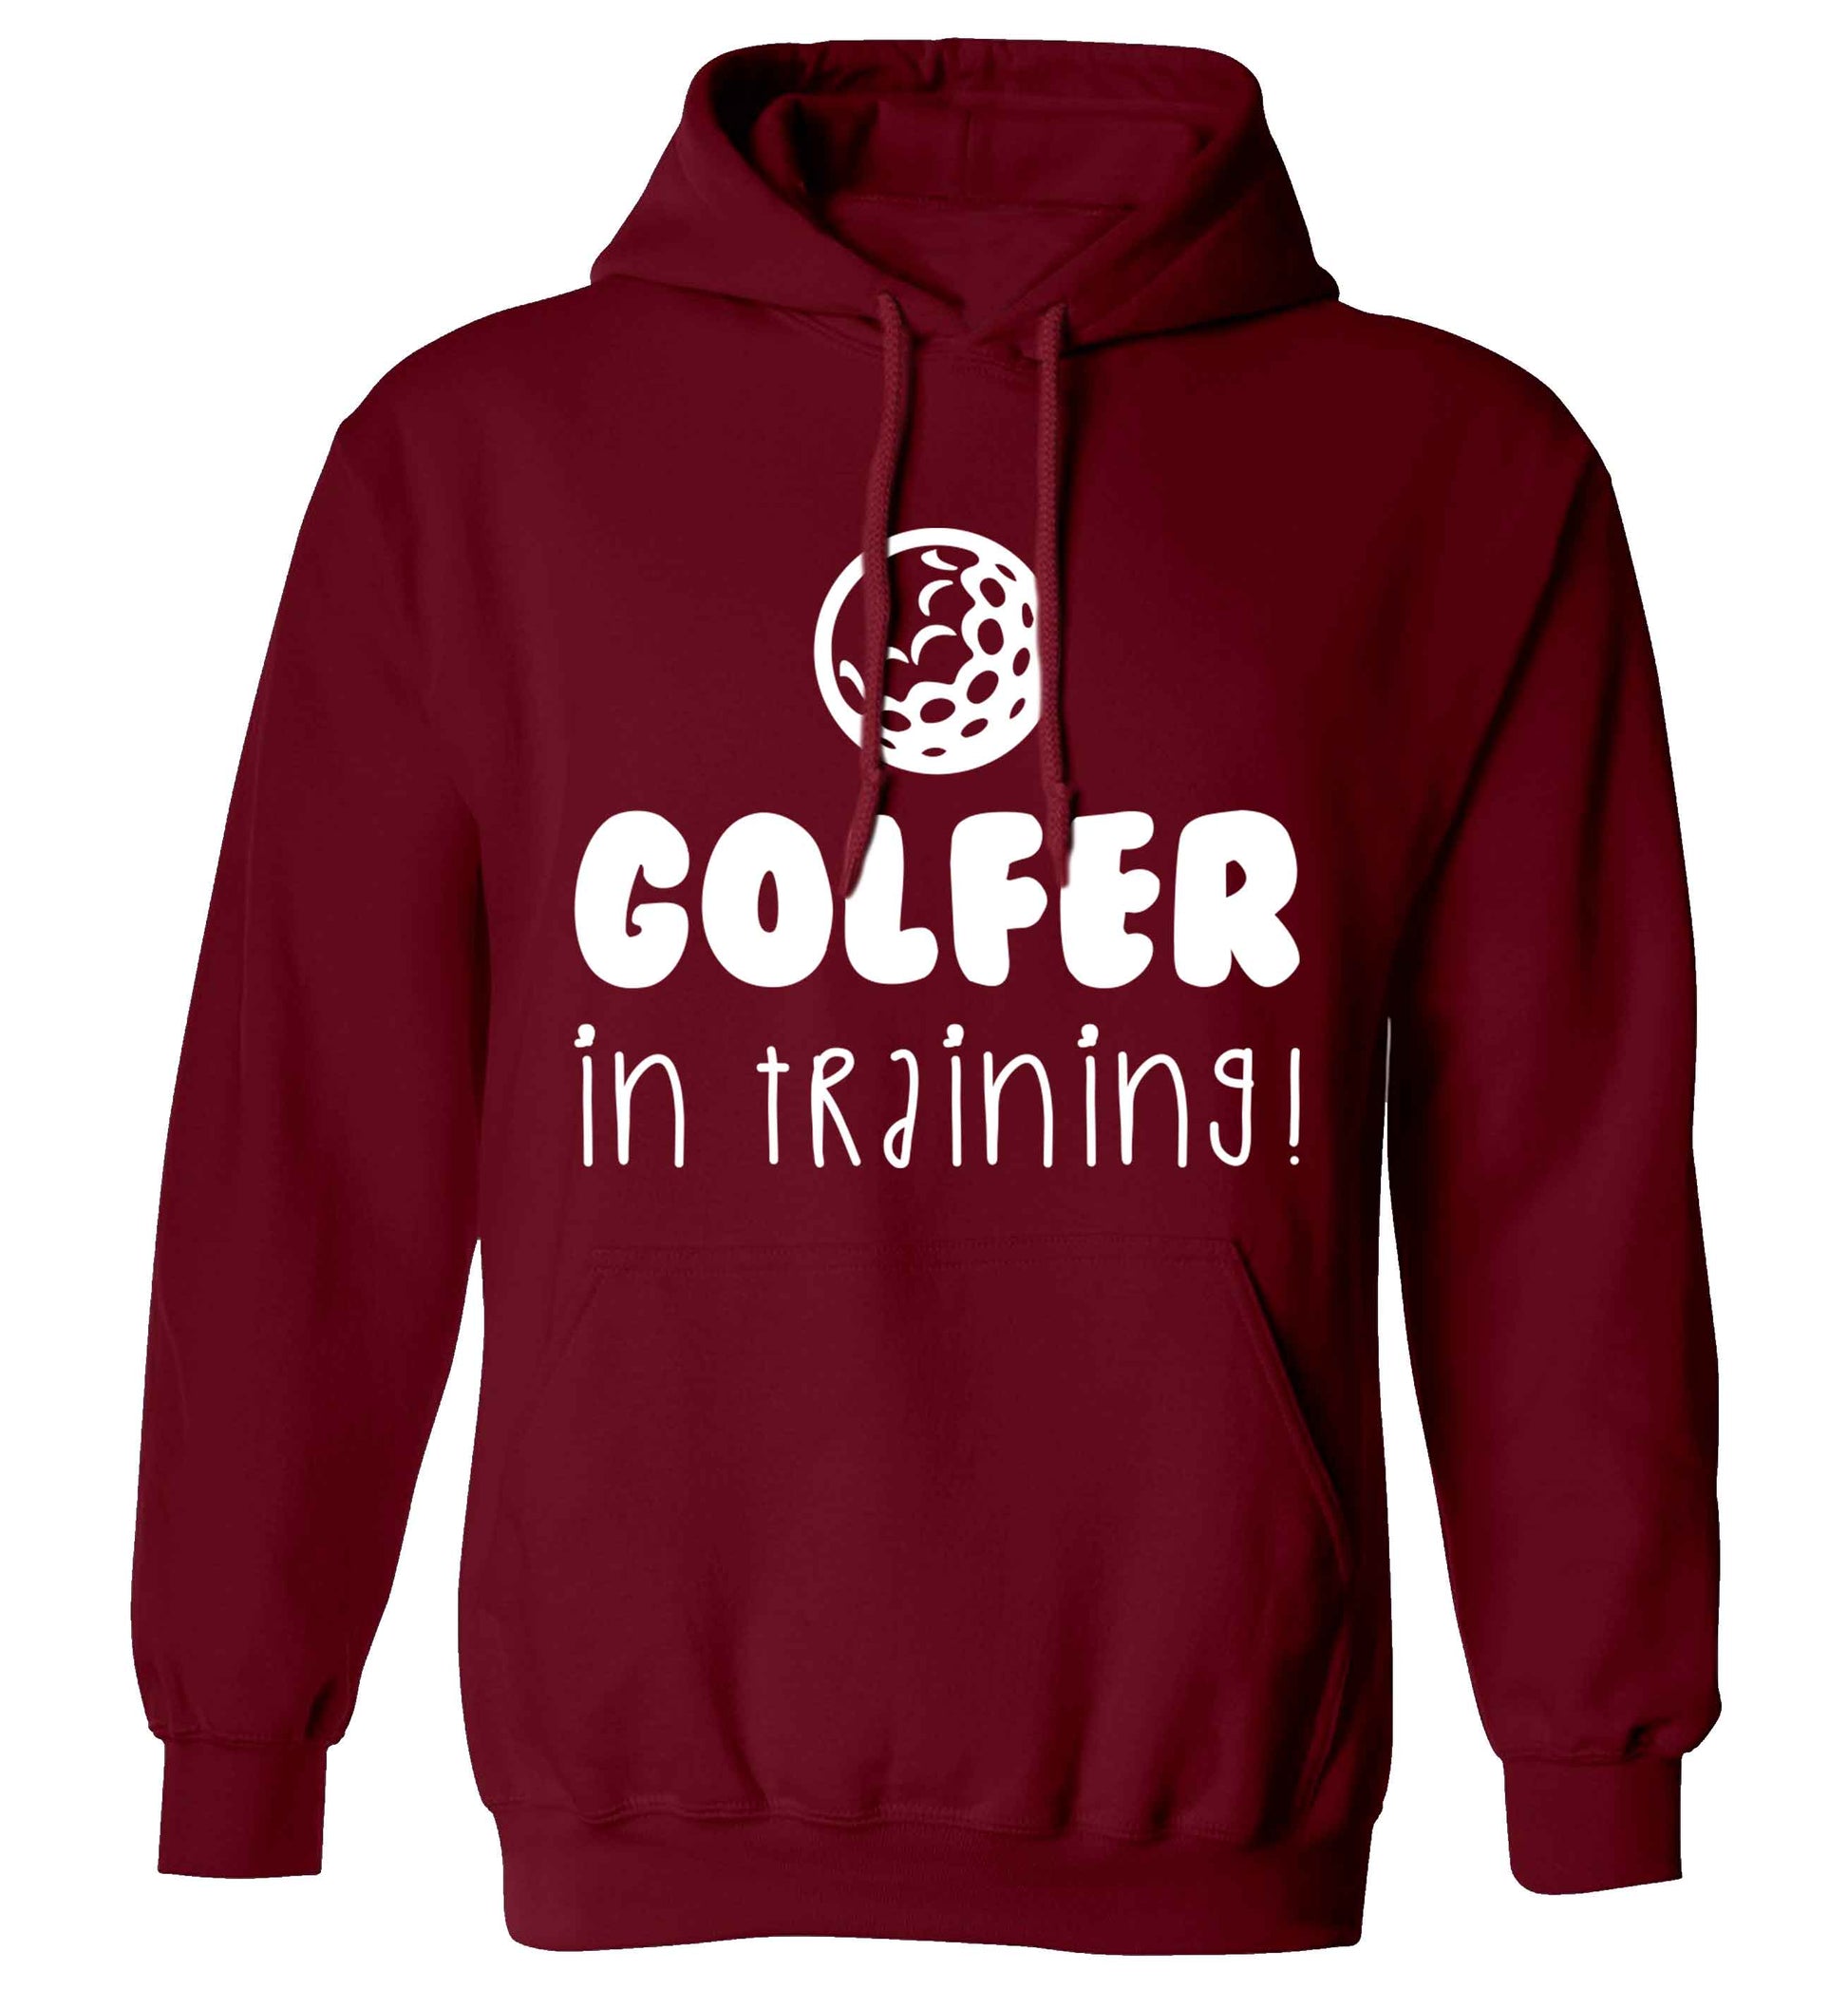 Golfer in training adults unisex maroon hoodie 2XL